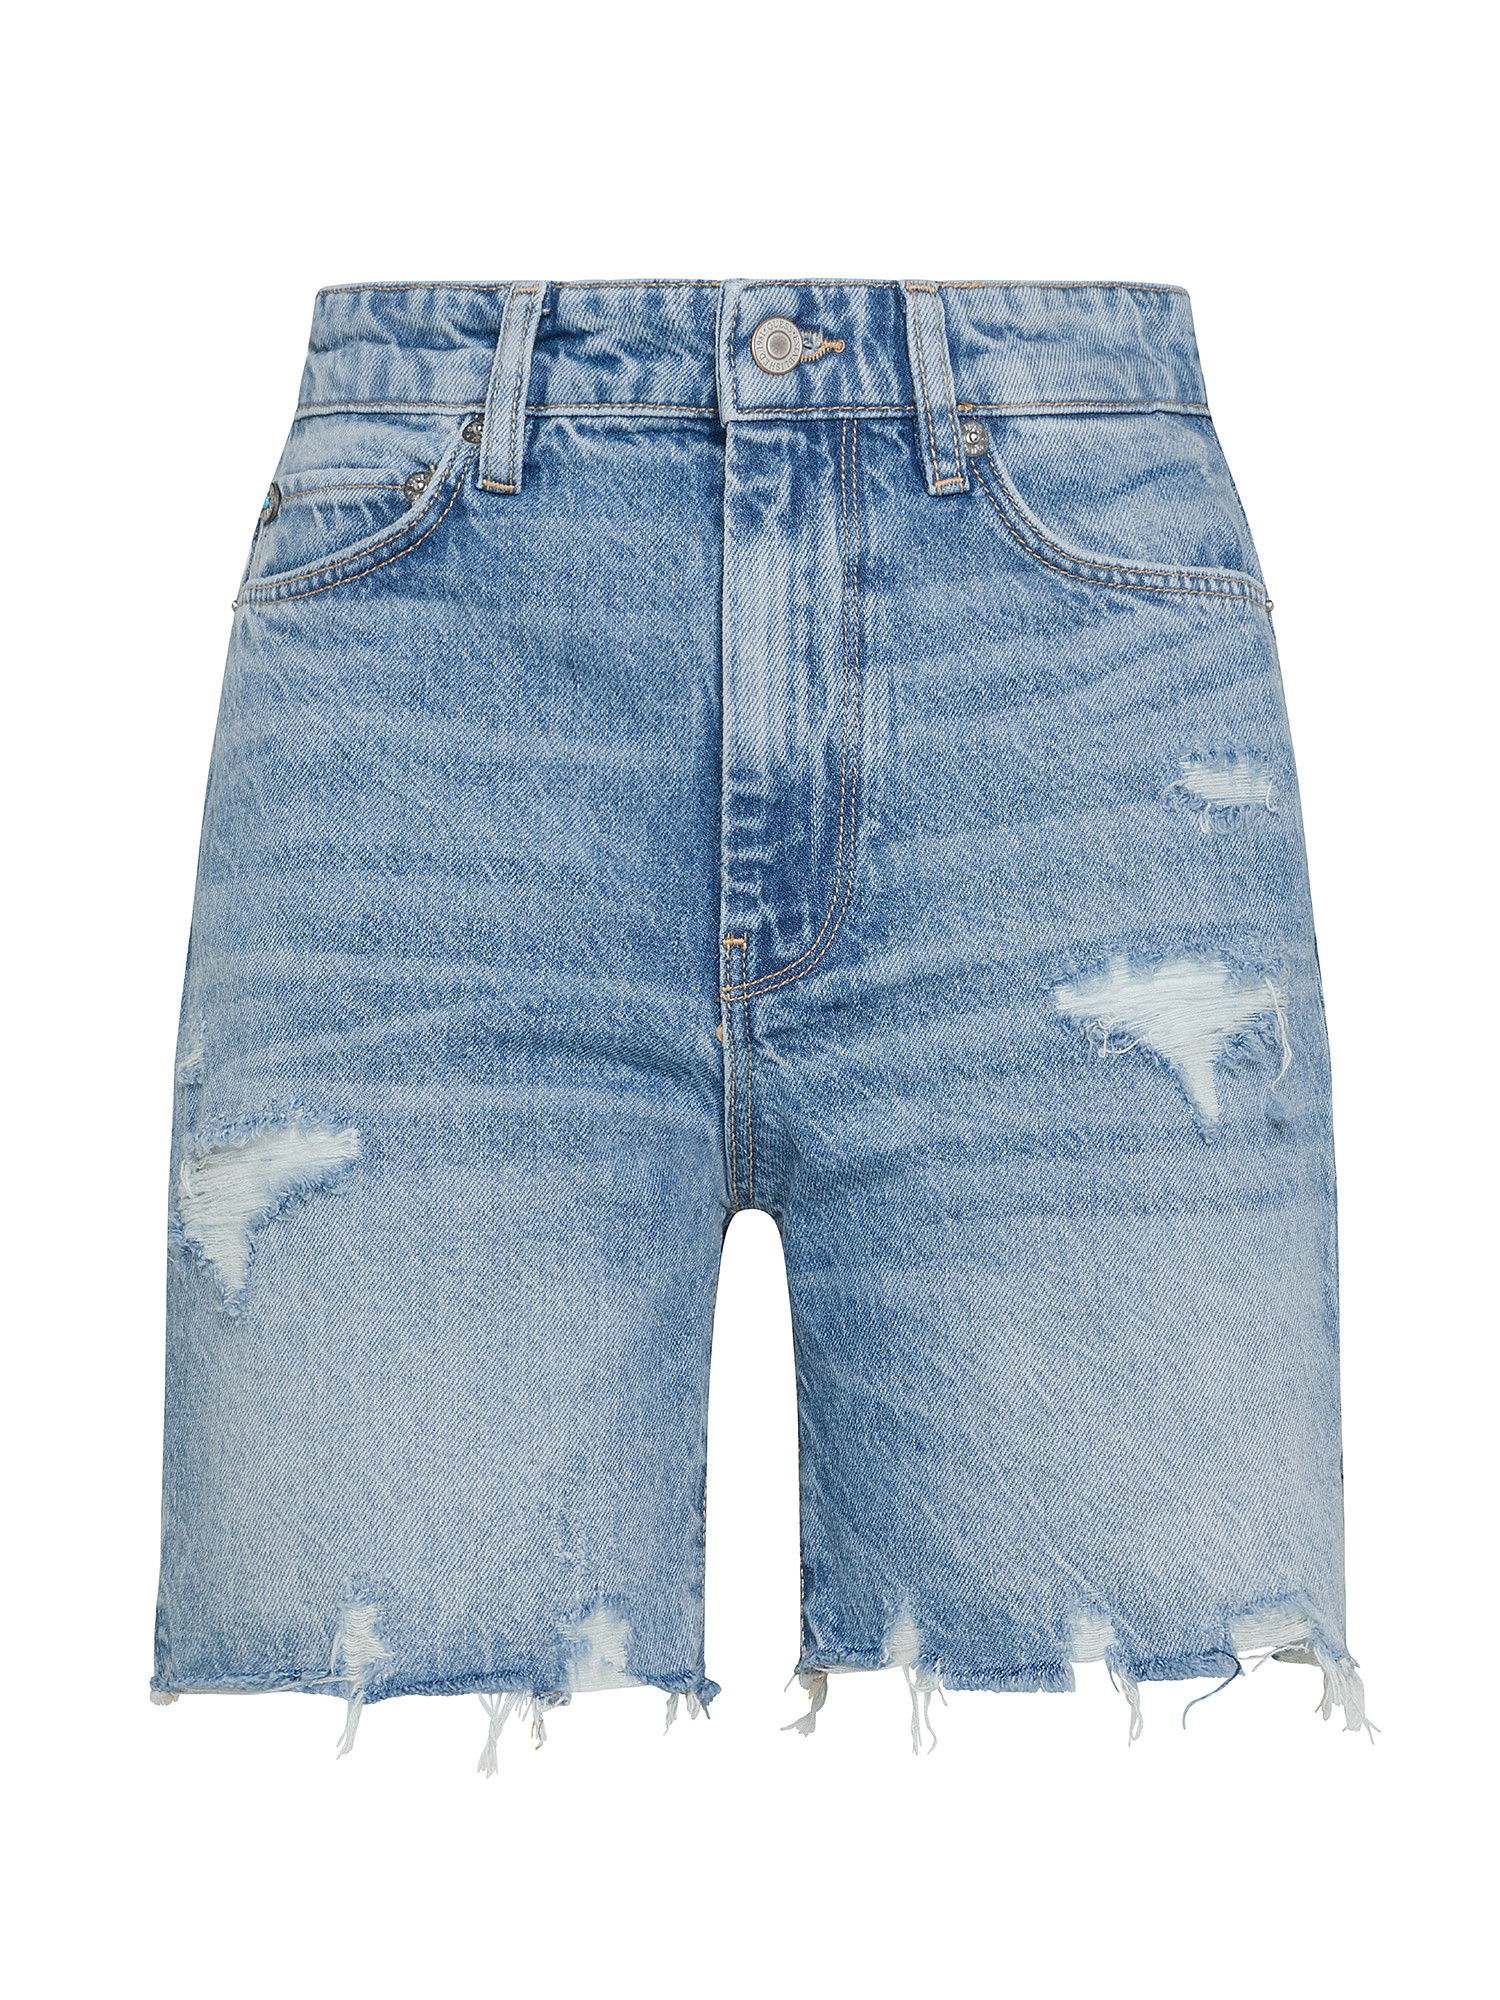 GUESS - Short in jeans a vita alta, Denim, large image number 0